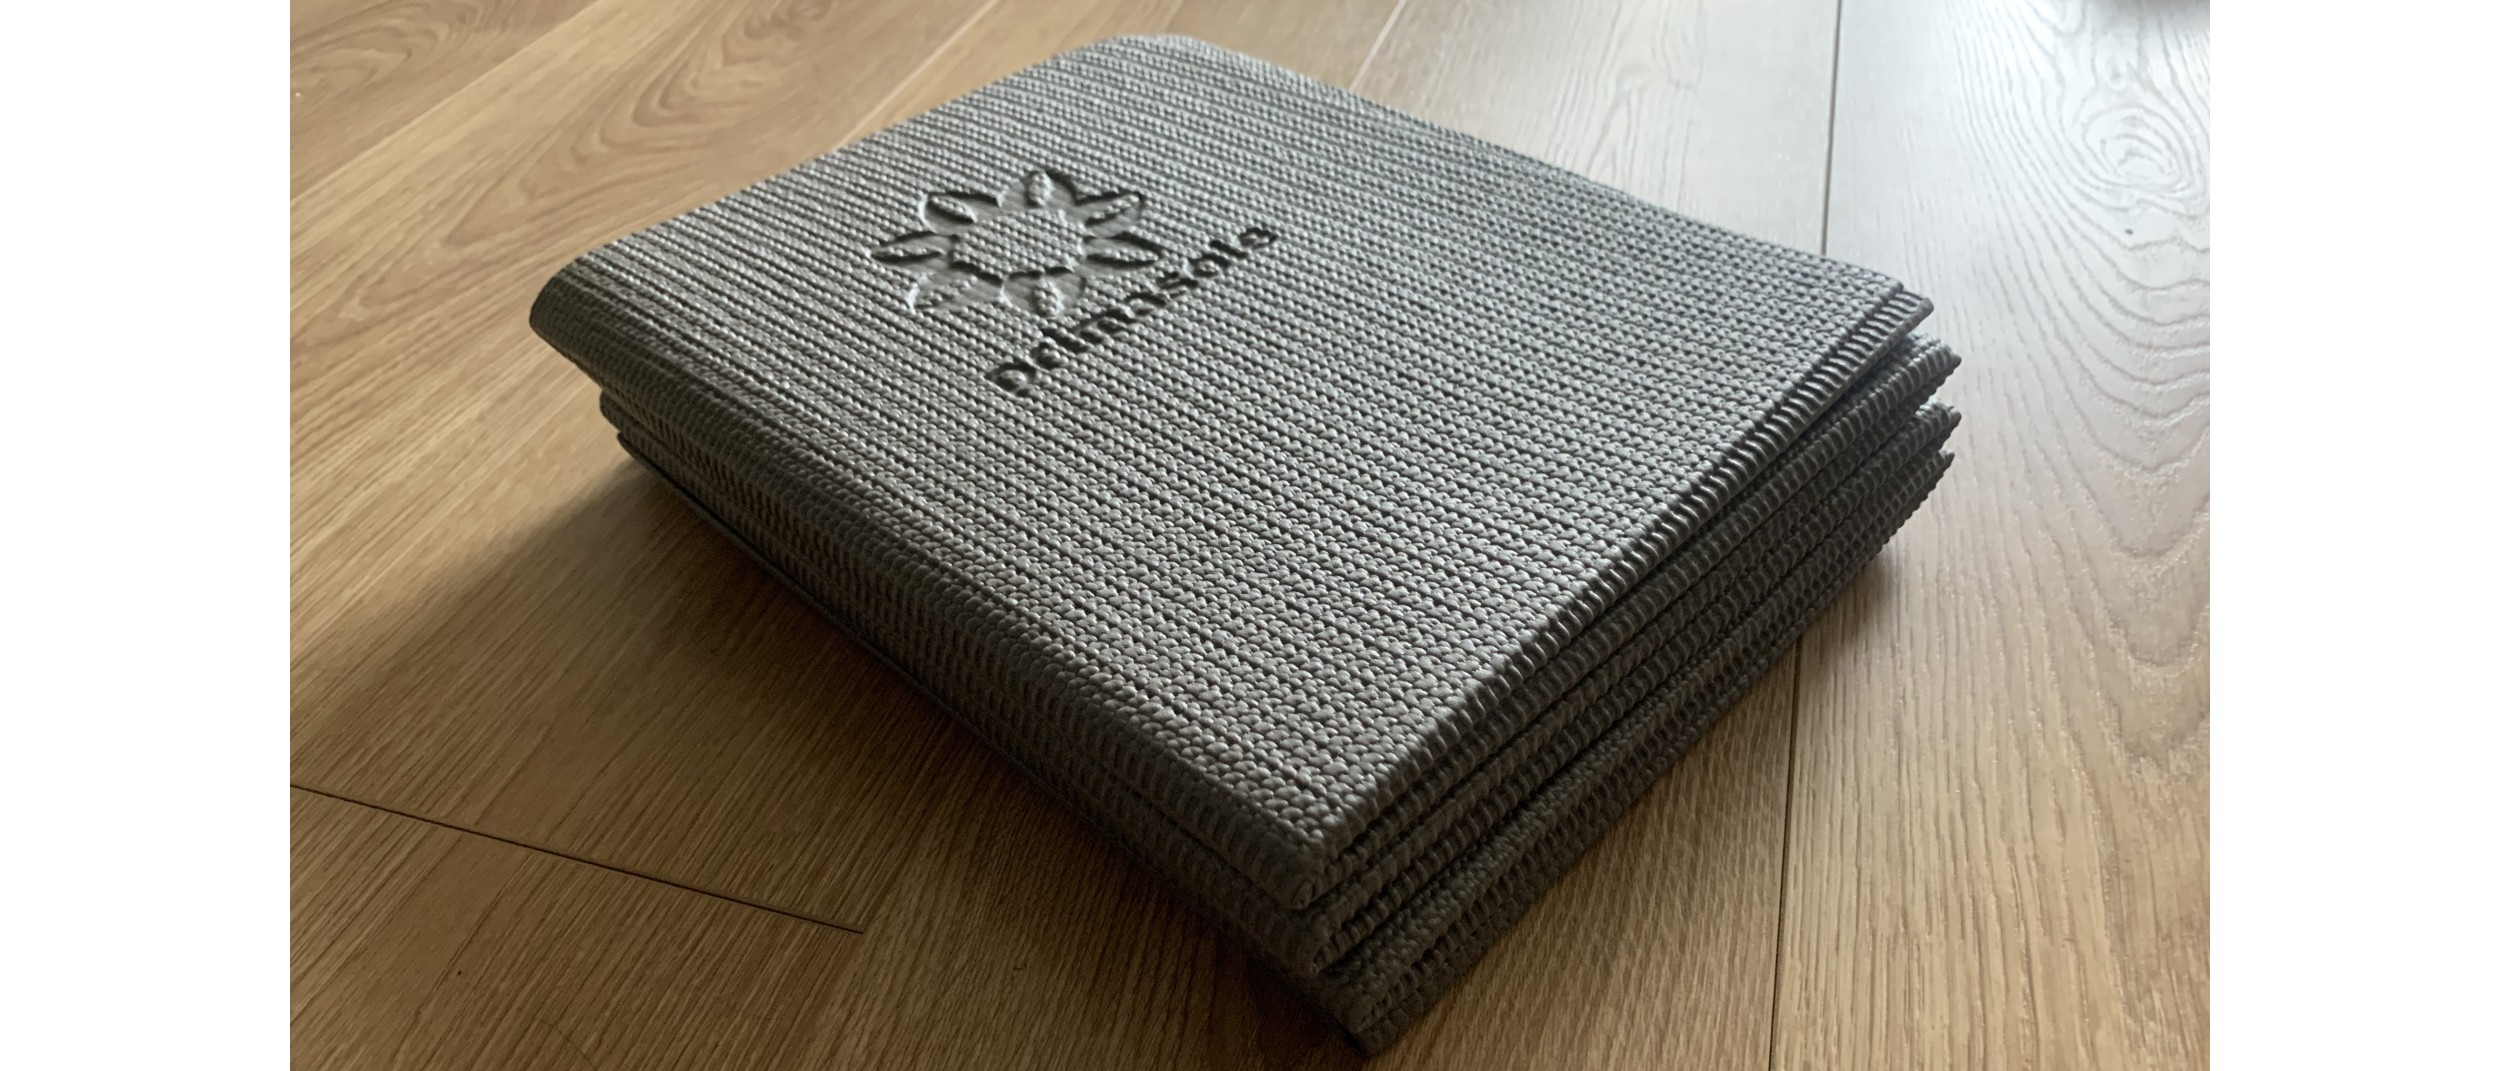 Best yoga mats: Primasole folding yoga mat folded into a square